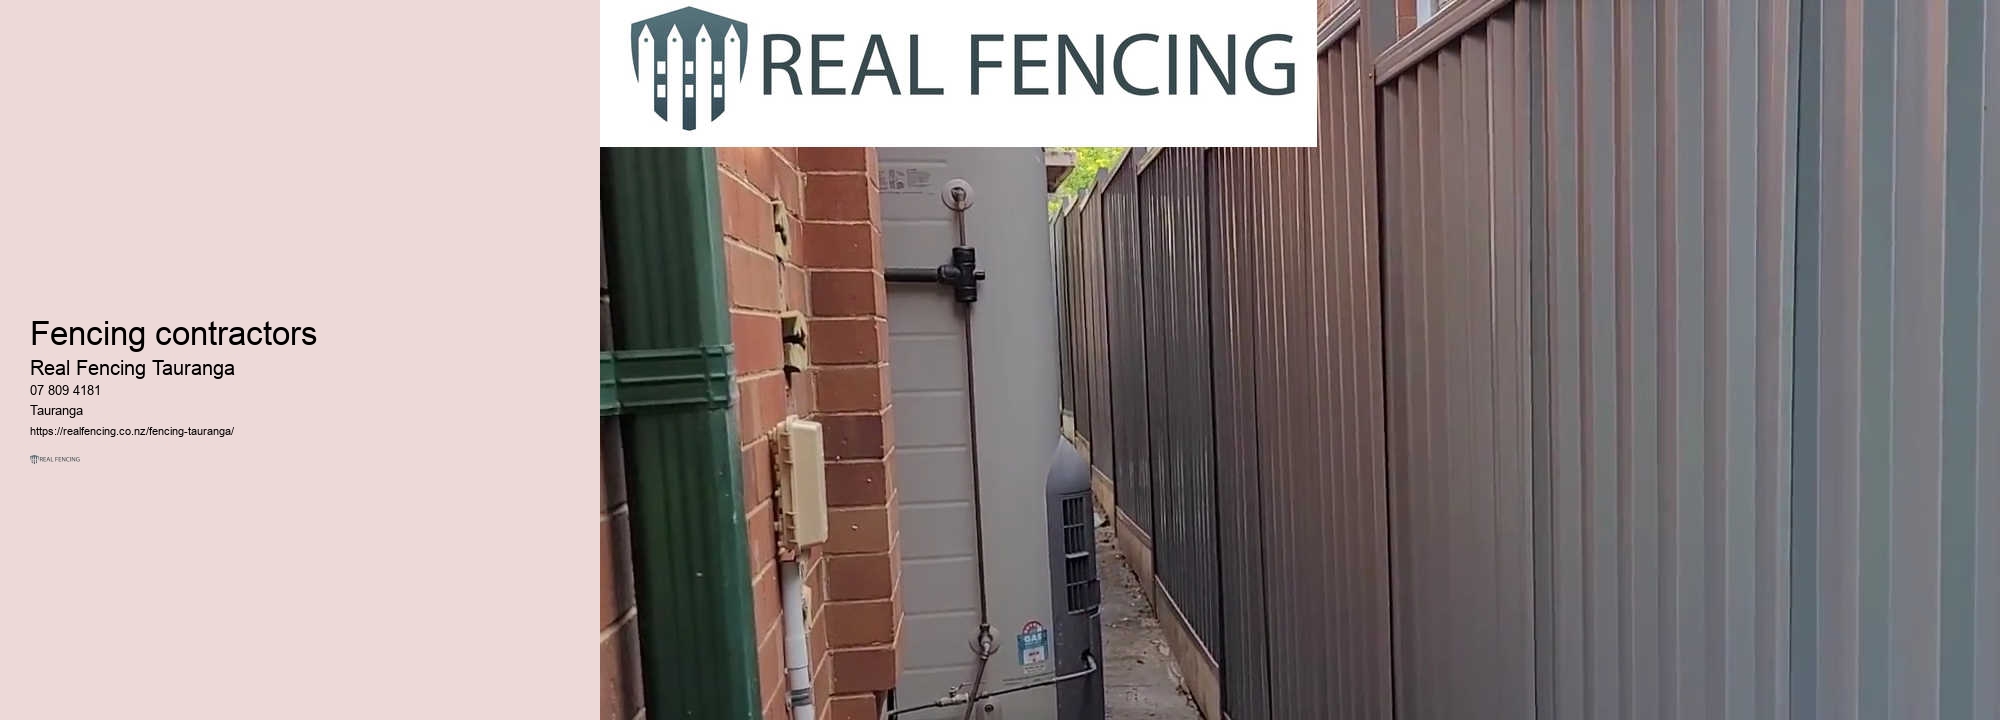 Metal fencing contractors